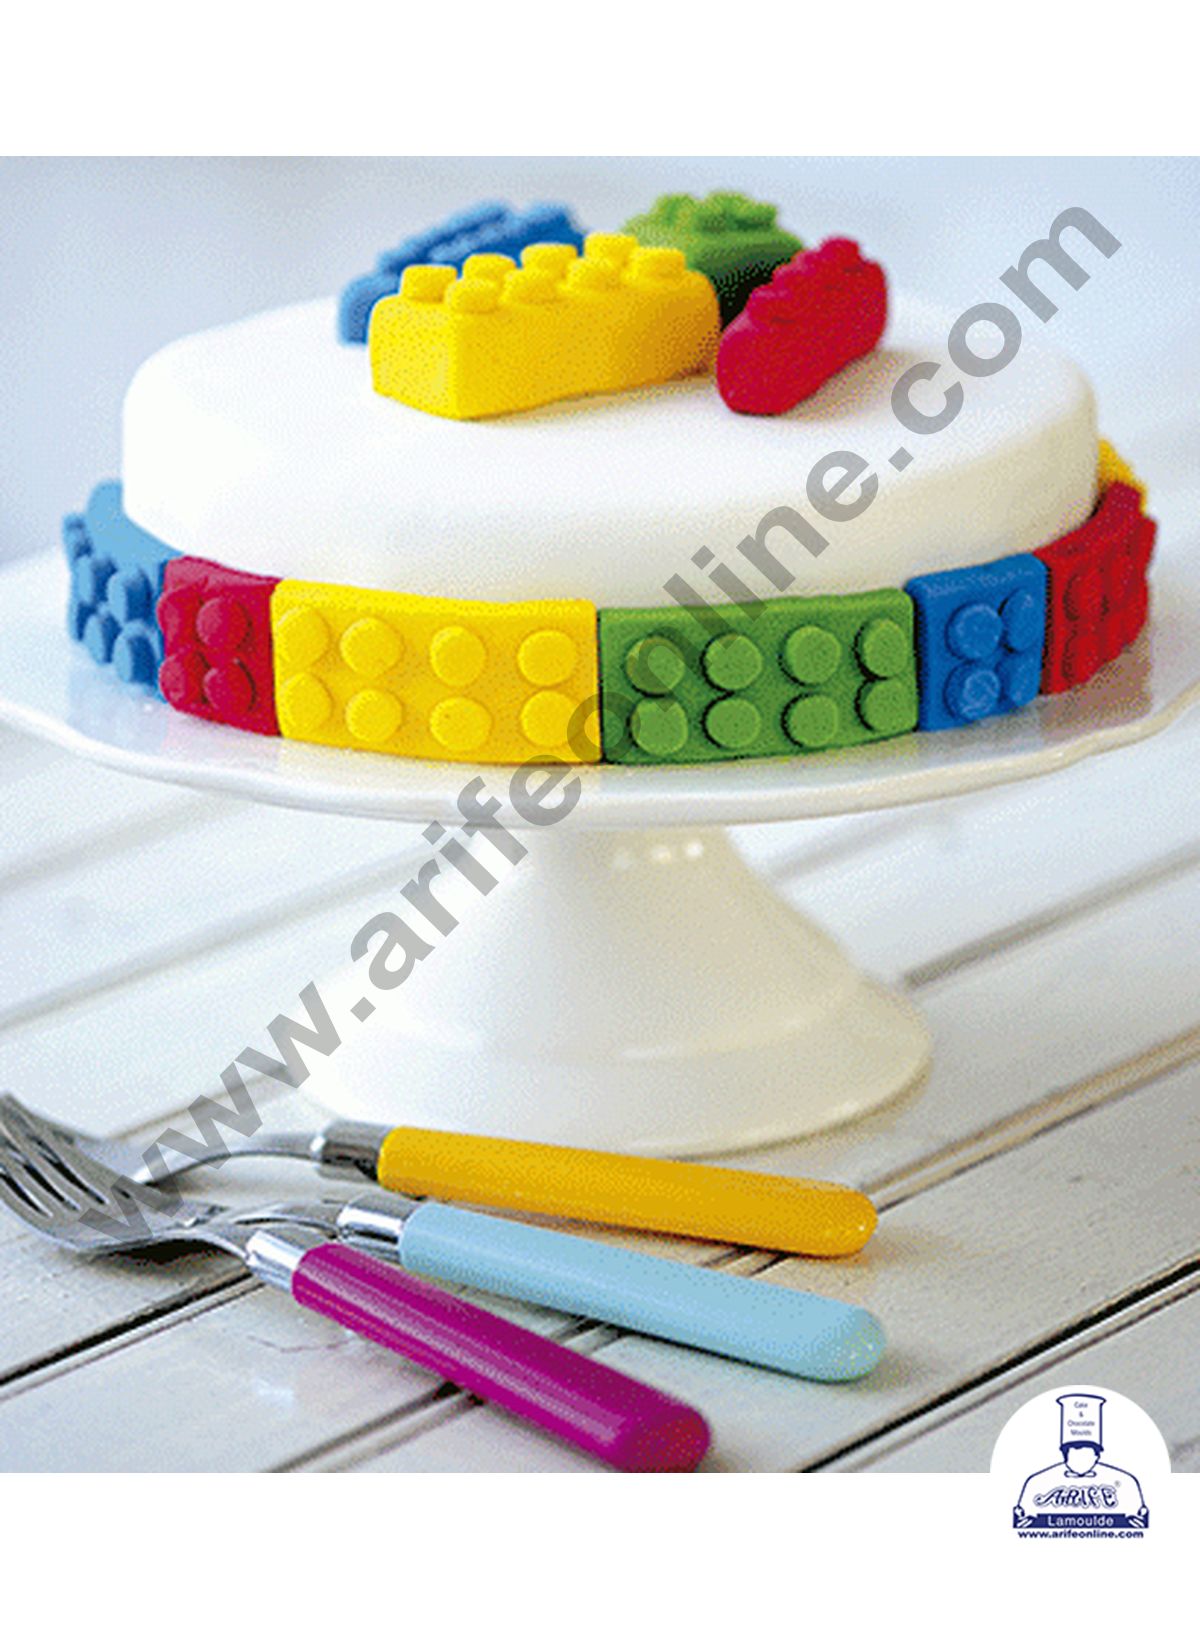 852708 Minifigure Cake Mould | Brickipedia | Fandom